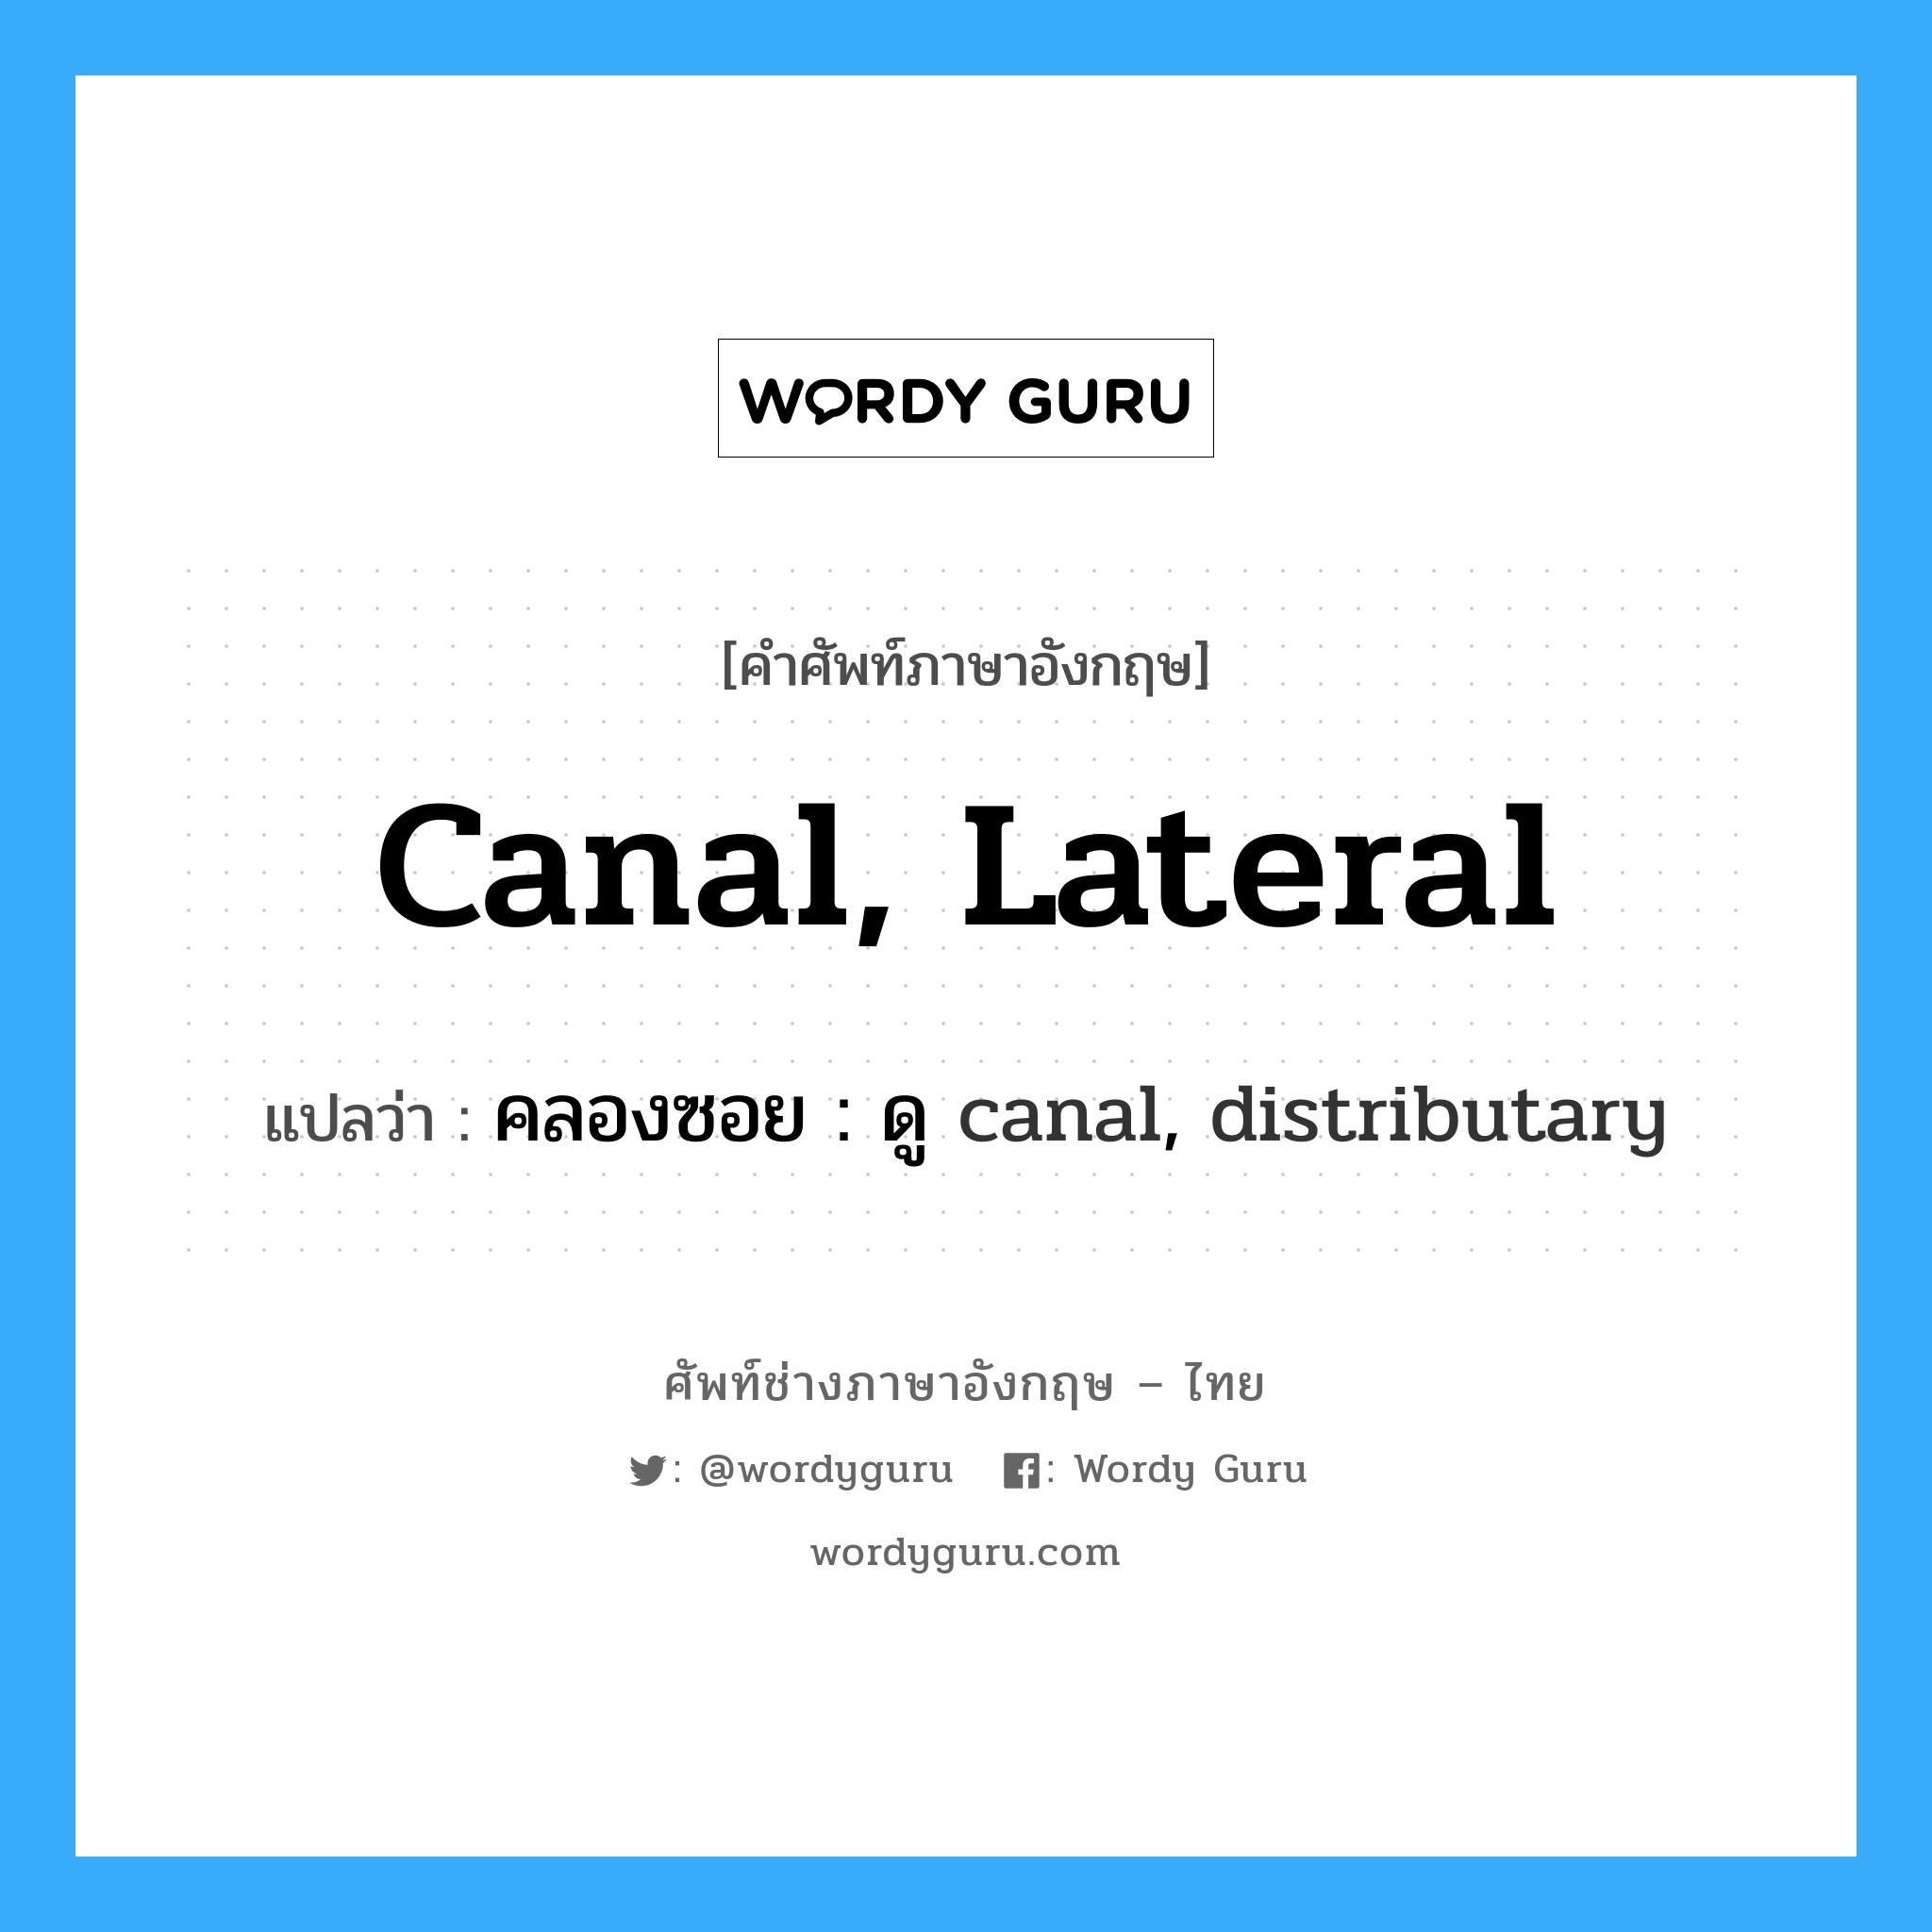 canal, lateral แปลว่า?, คำศัพท์ช่างภาษาอังกฤษ - ไทย canal, lateral คำศัพท์ภาษาอังกฤษ canal, lateral แปลว่า คลองซอย : ดู canal, distributary